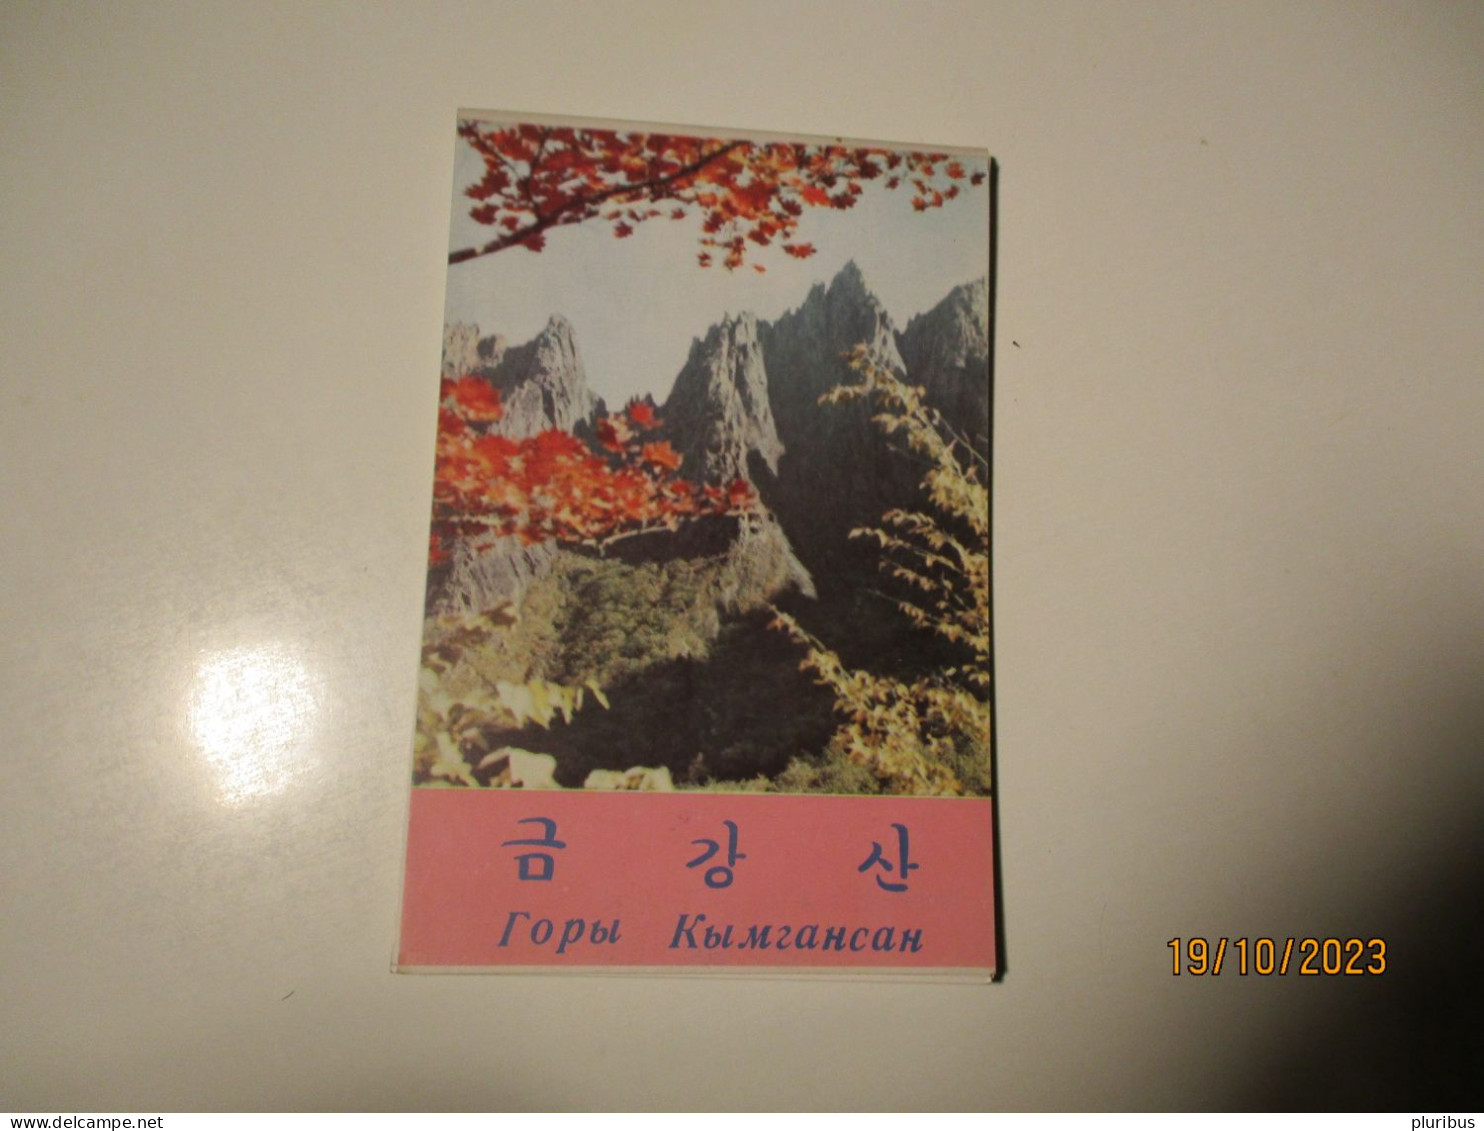 NORTH KOREA , SET OF 9 POSTCARDS KYMGANSAN KUMGANSAN KUMGAN MOUNTAINS 1969 - Korea (Nord)